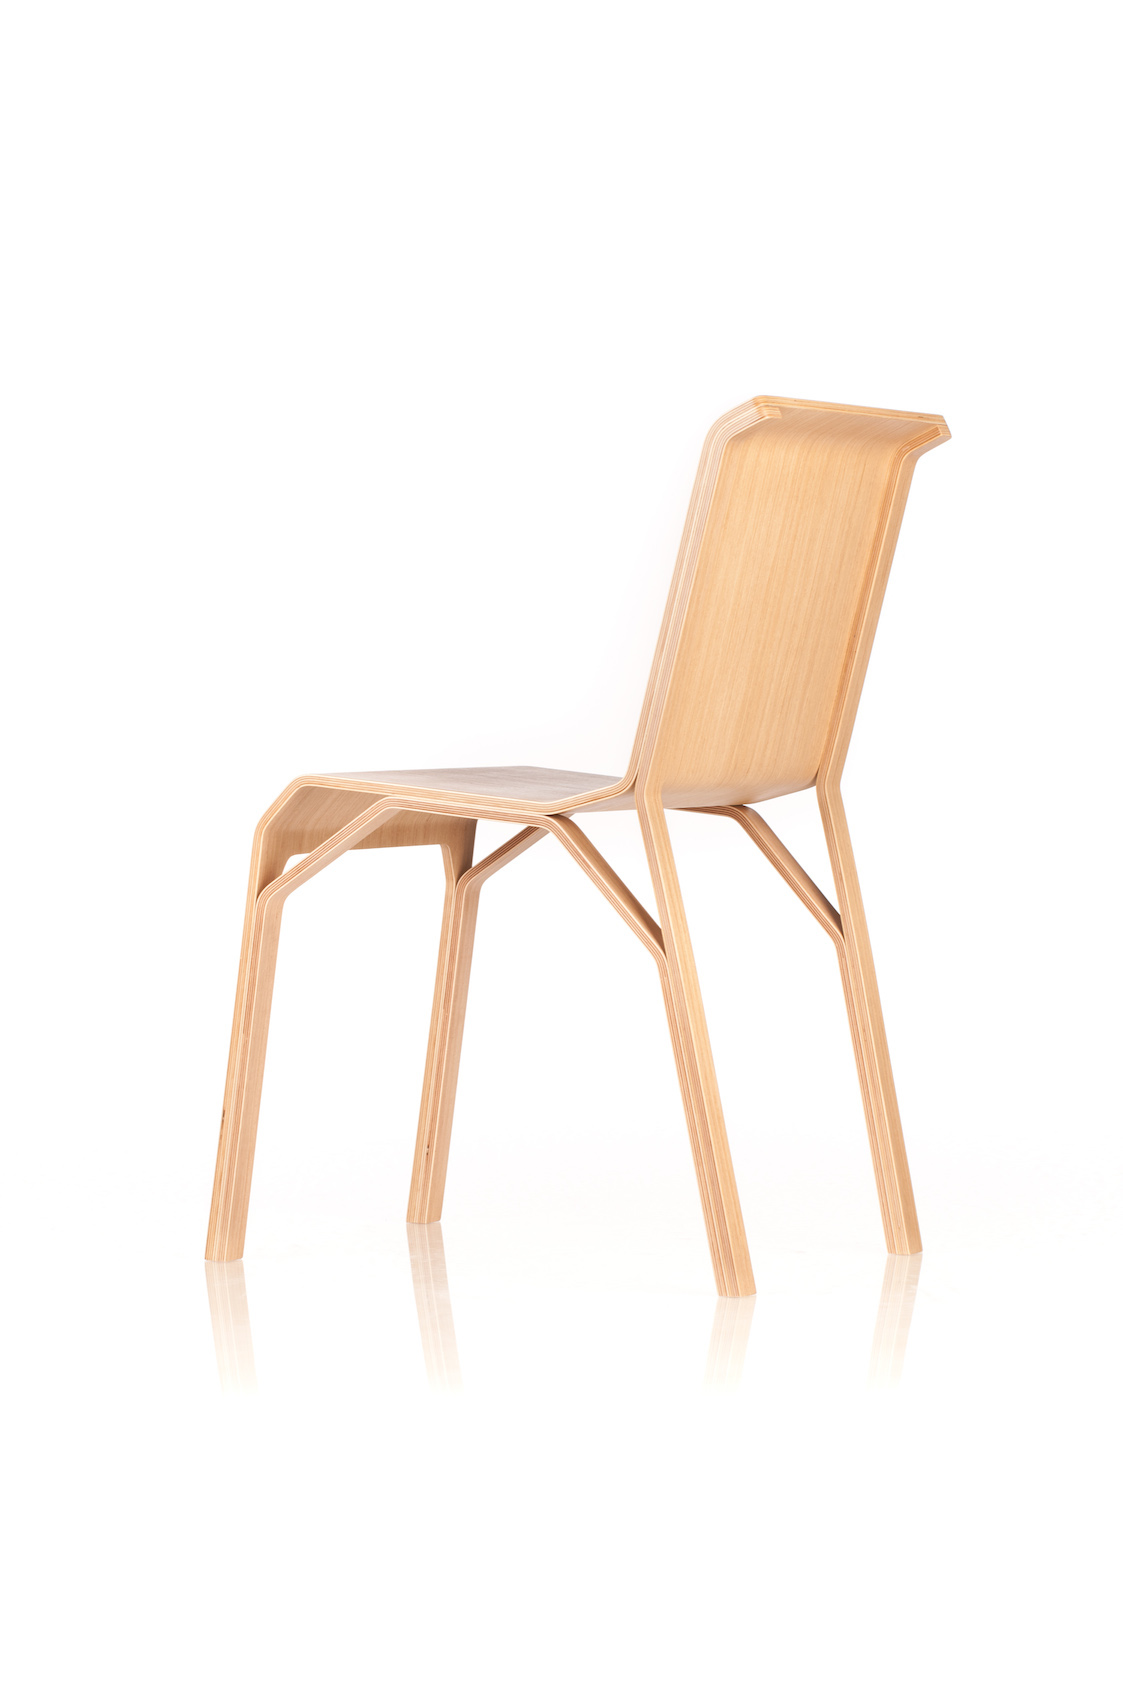 i wood like iwoodlike trimo chair trimo modern chair cafe chair dinning chair modern furniture